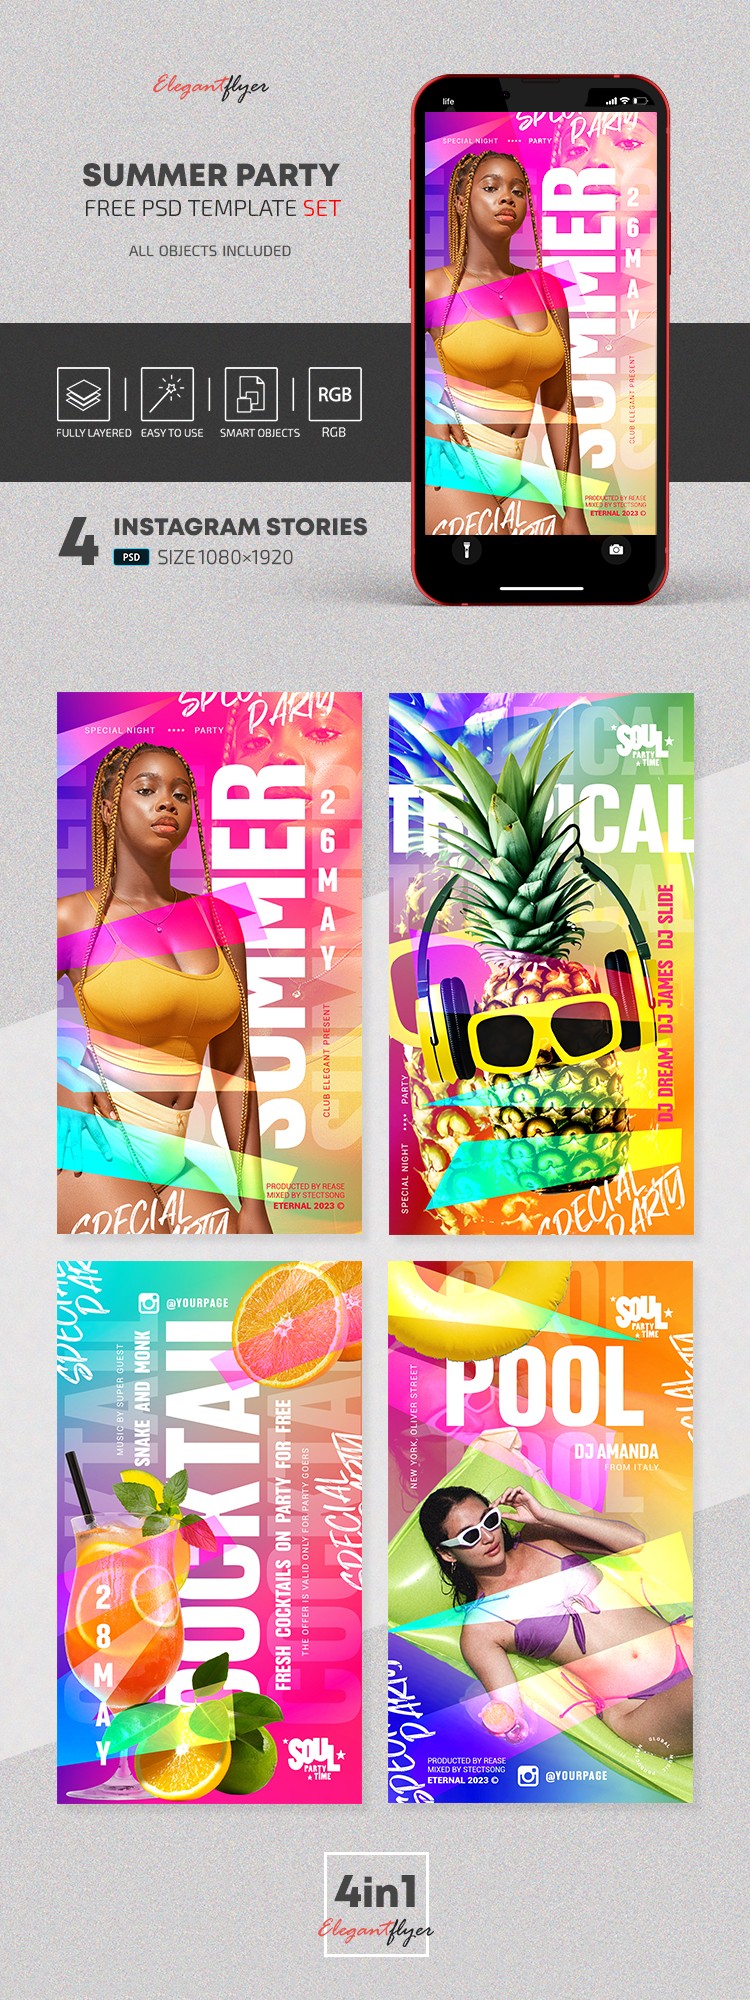 Summer Party - Free Instagram Stories Template Set in PSD by ElegantFlyer